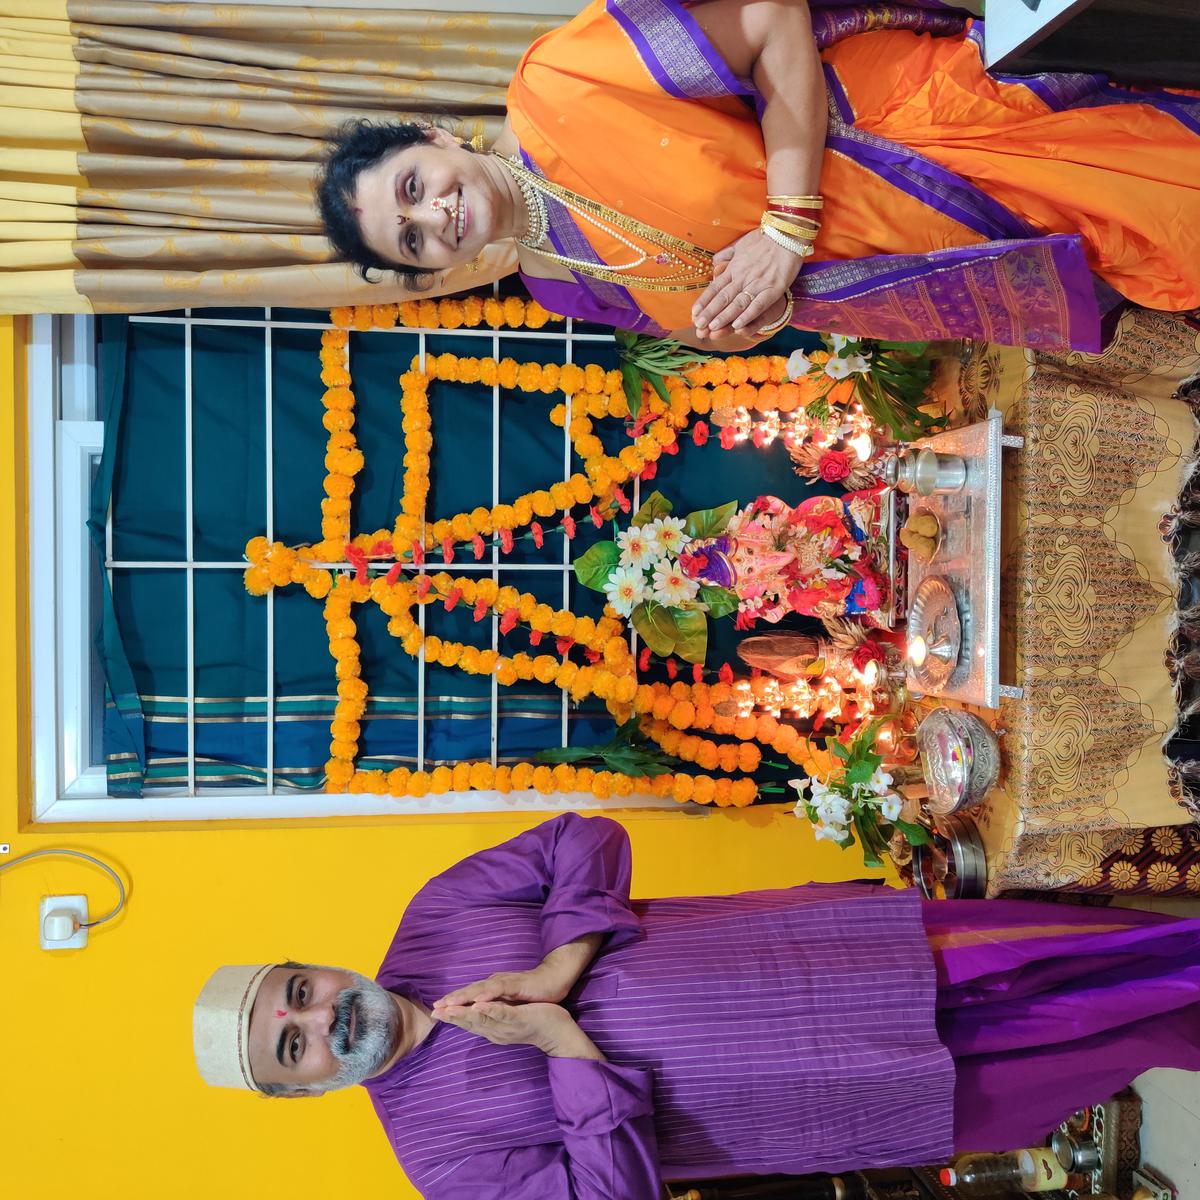 Bhagyashree Barbadikar from Visakhapatnam during her traditional Maharashtrian Ganesh Chaturthi festivities at home.